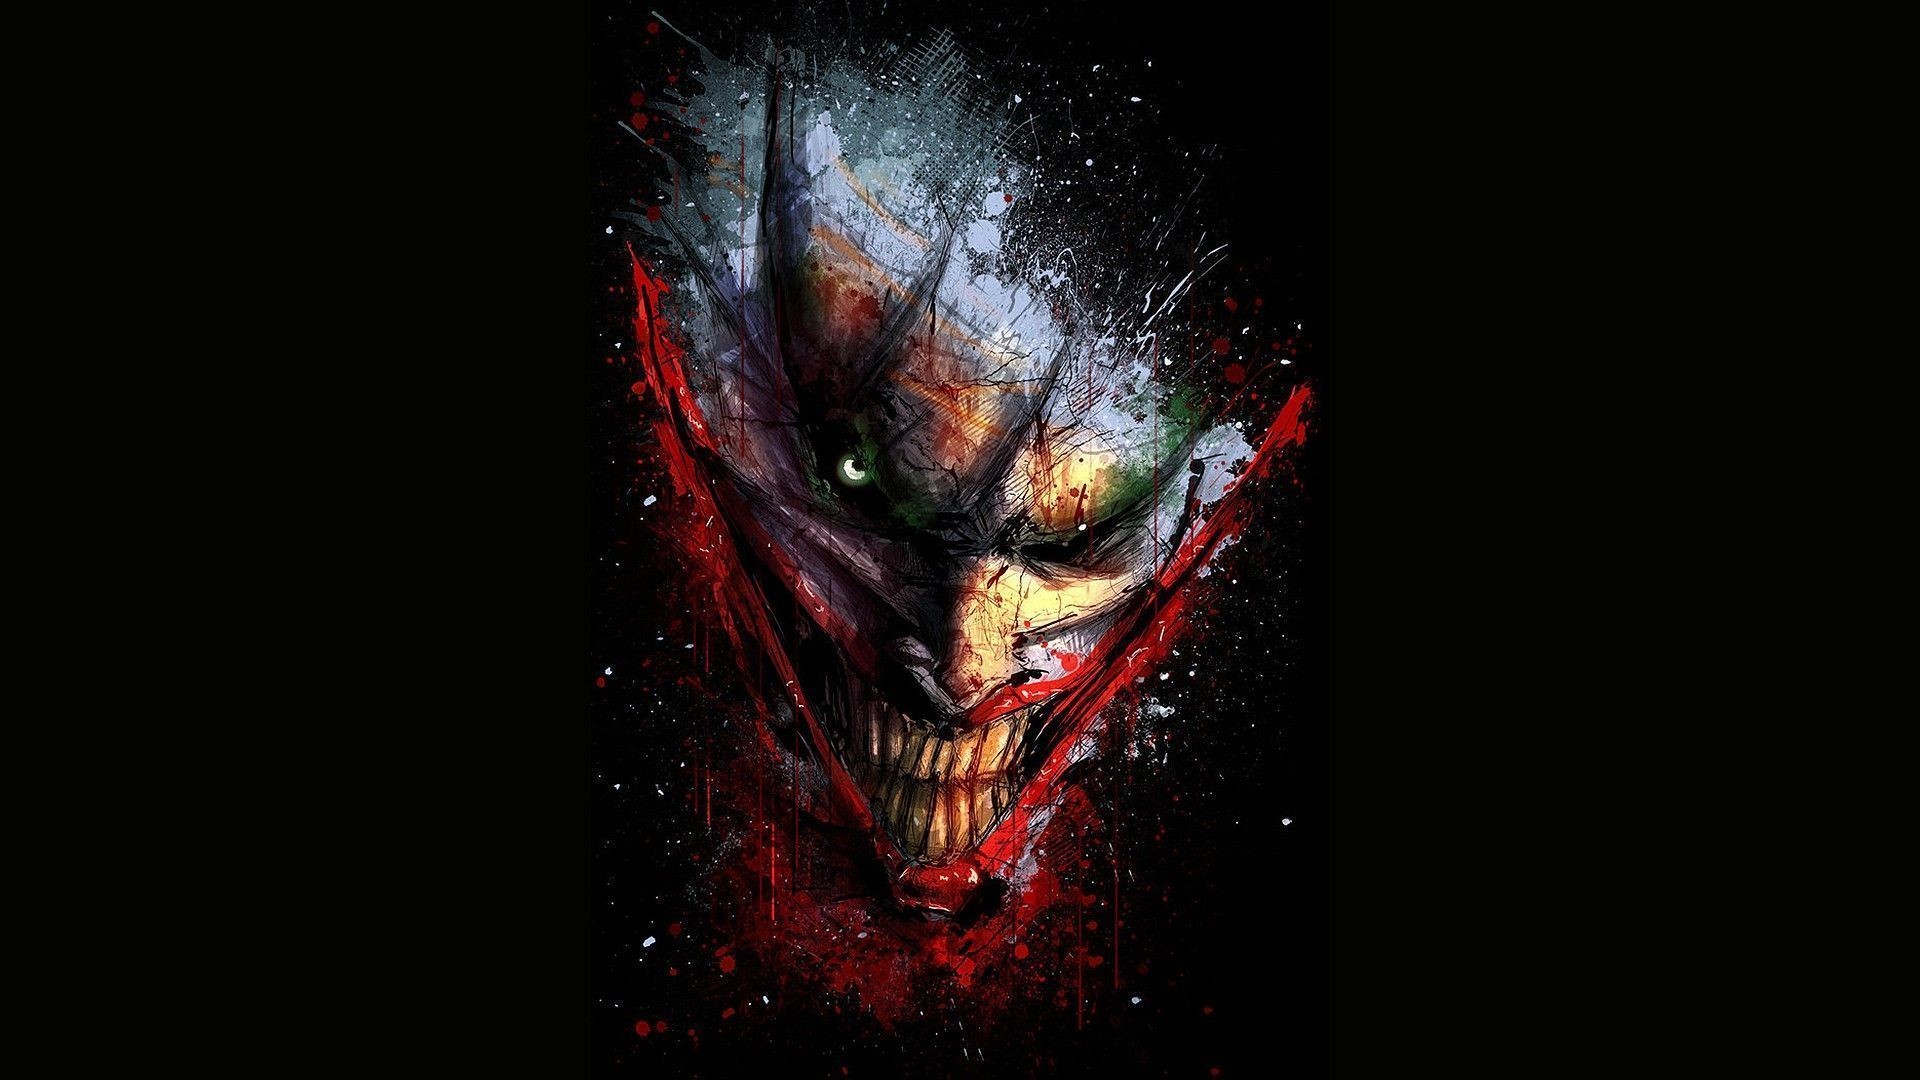 Hd wallpaper of joker – Batman Joker Wallpaper. Download